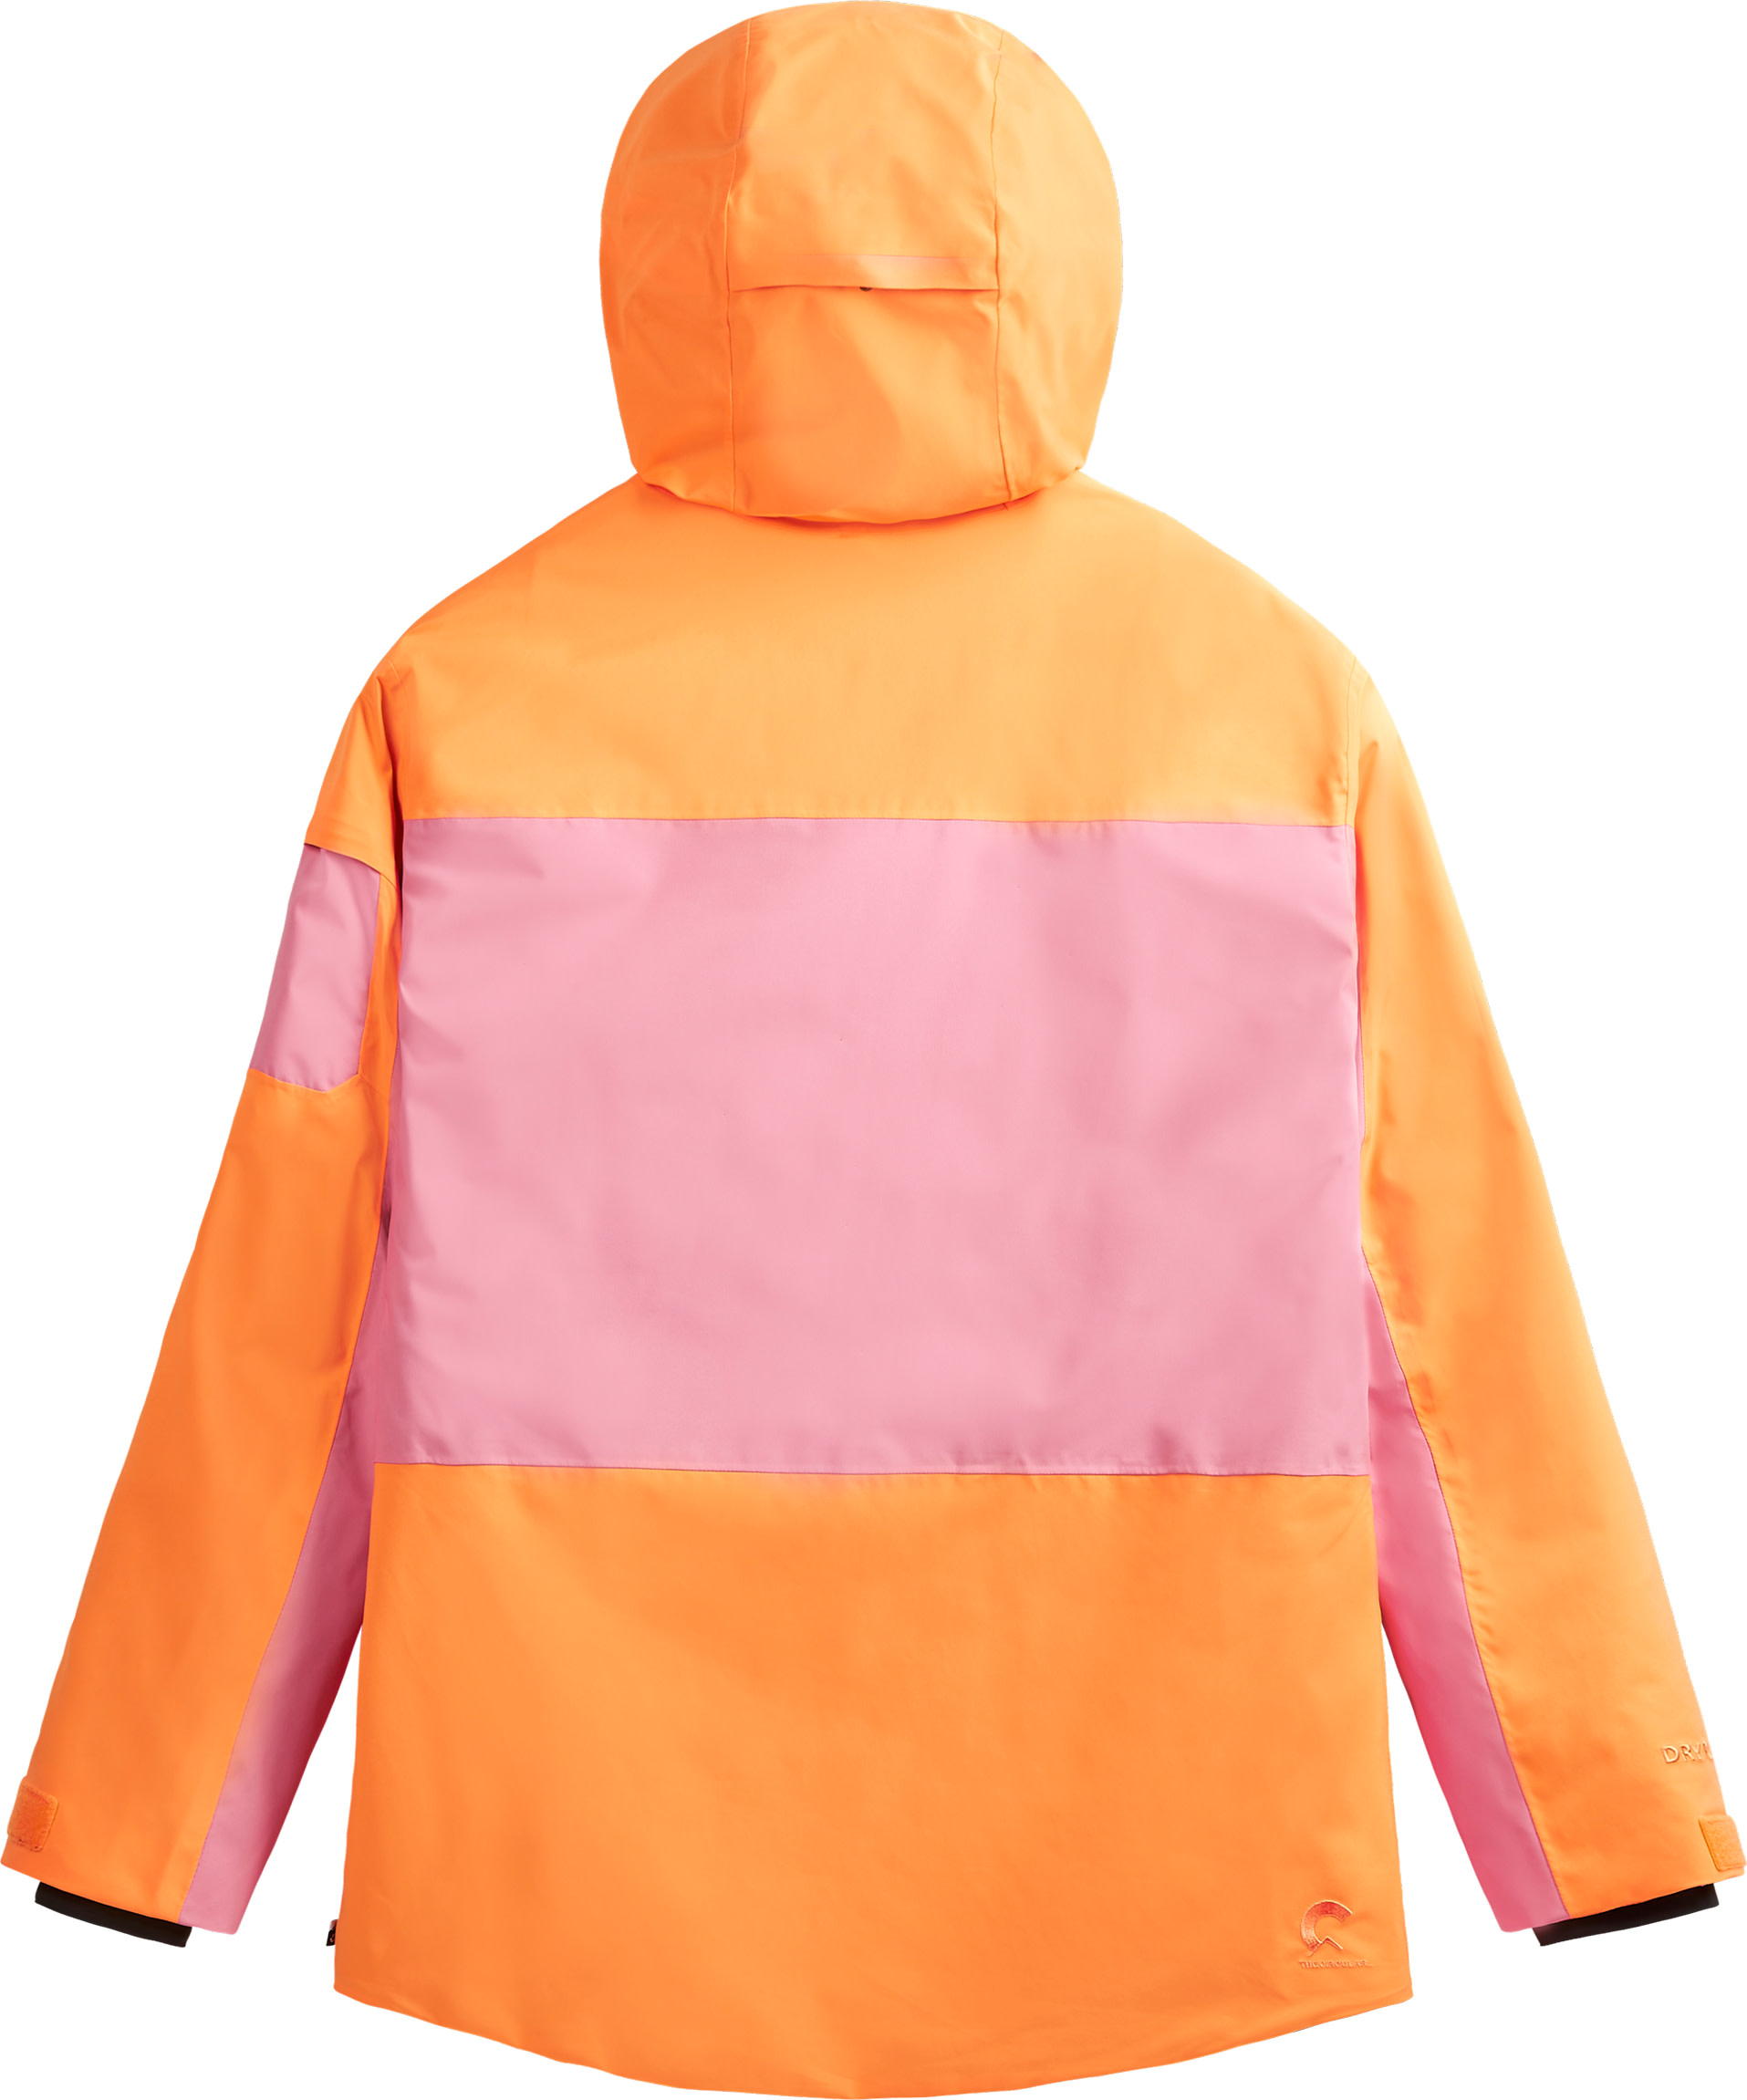 Women's Tangerine activewear reflective top Jacket Sz Med Color Orange  Striped